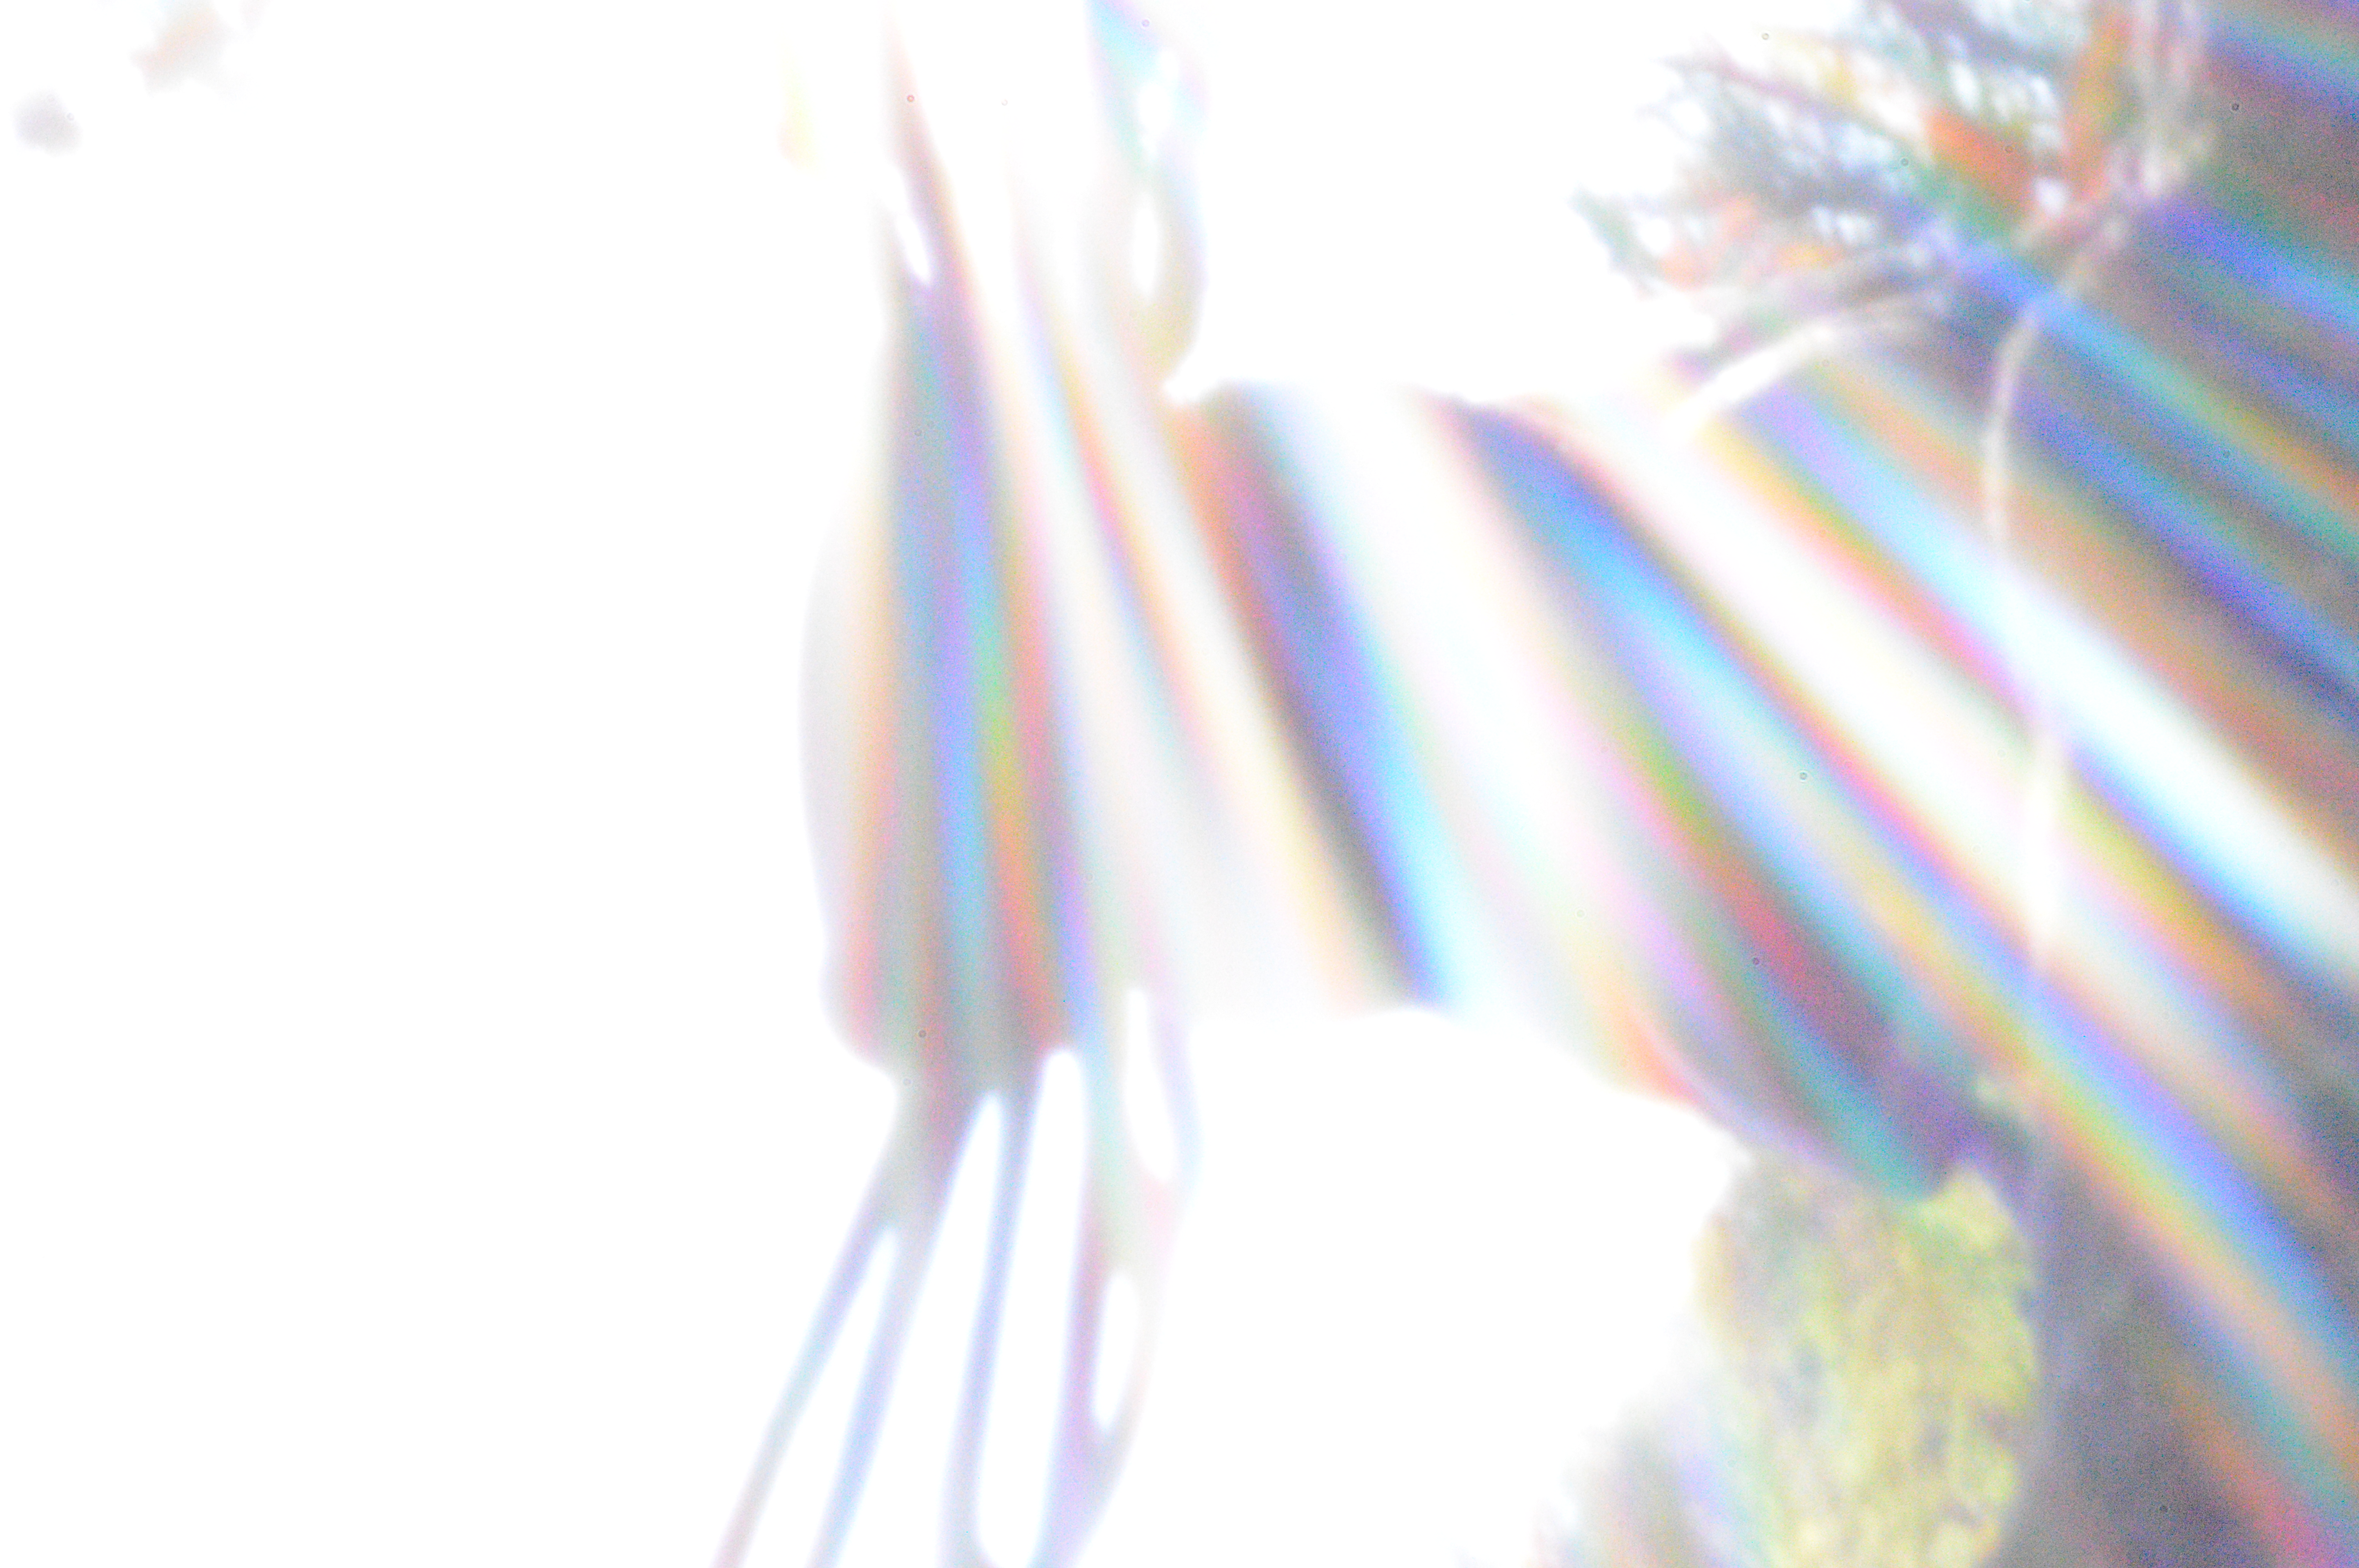 pinhole-photographs-mmxvii_bee-light-interference.jpg